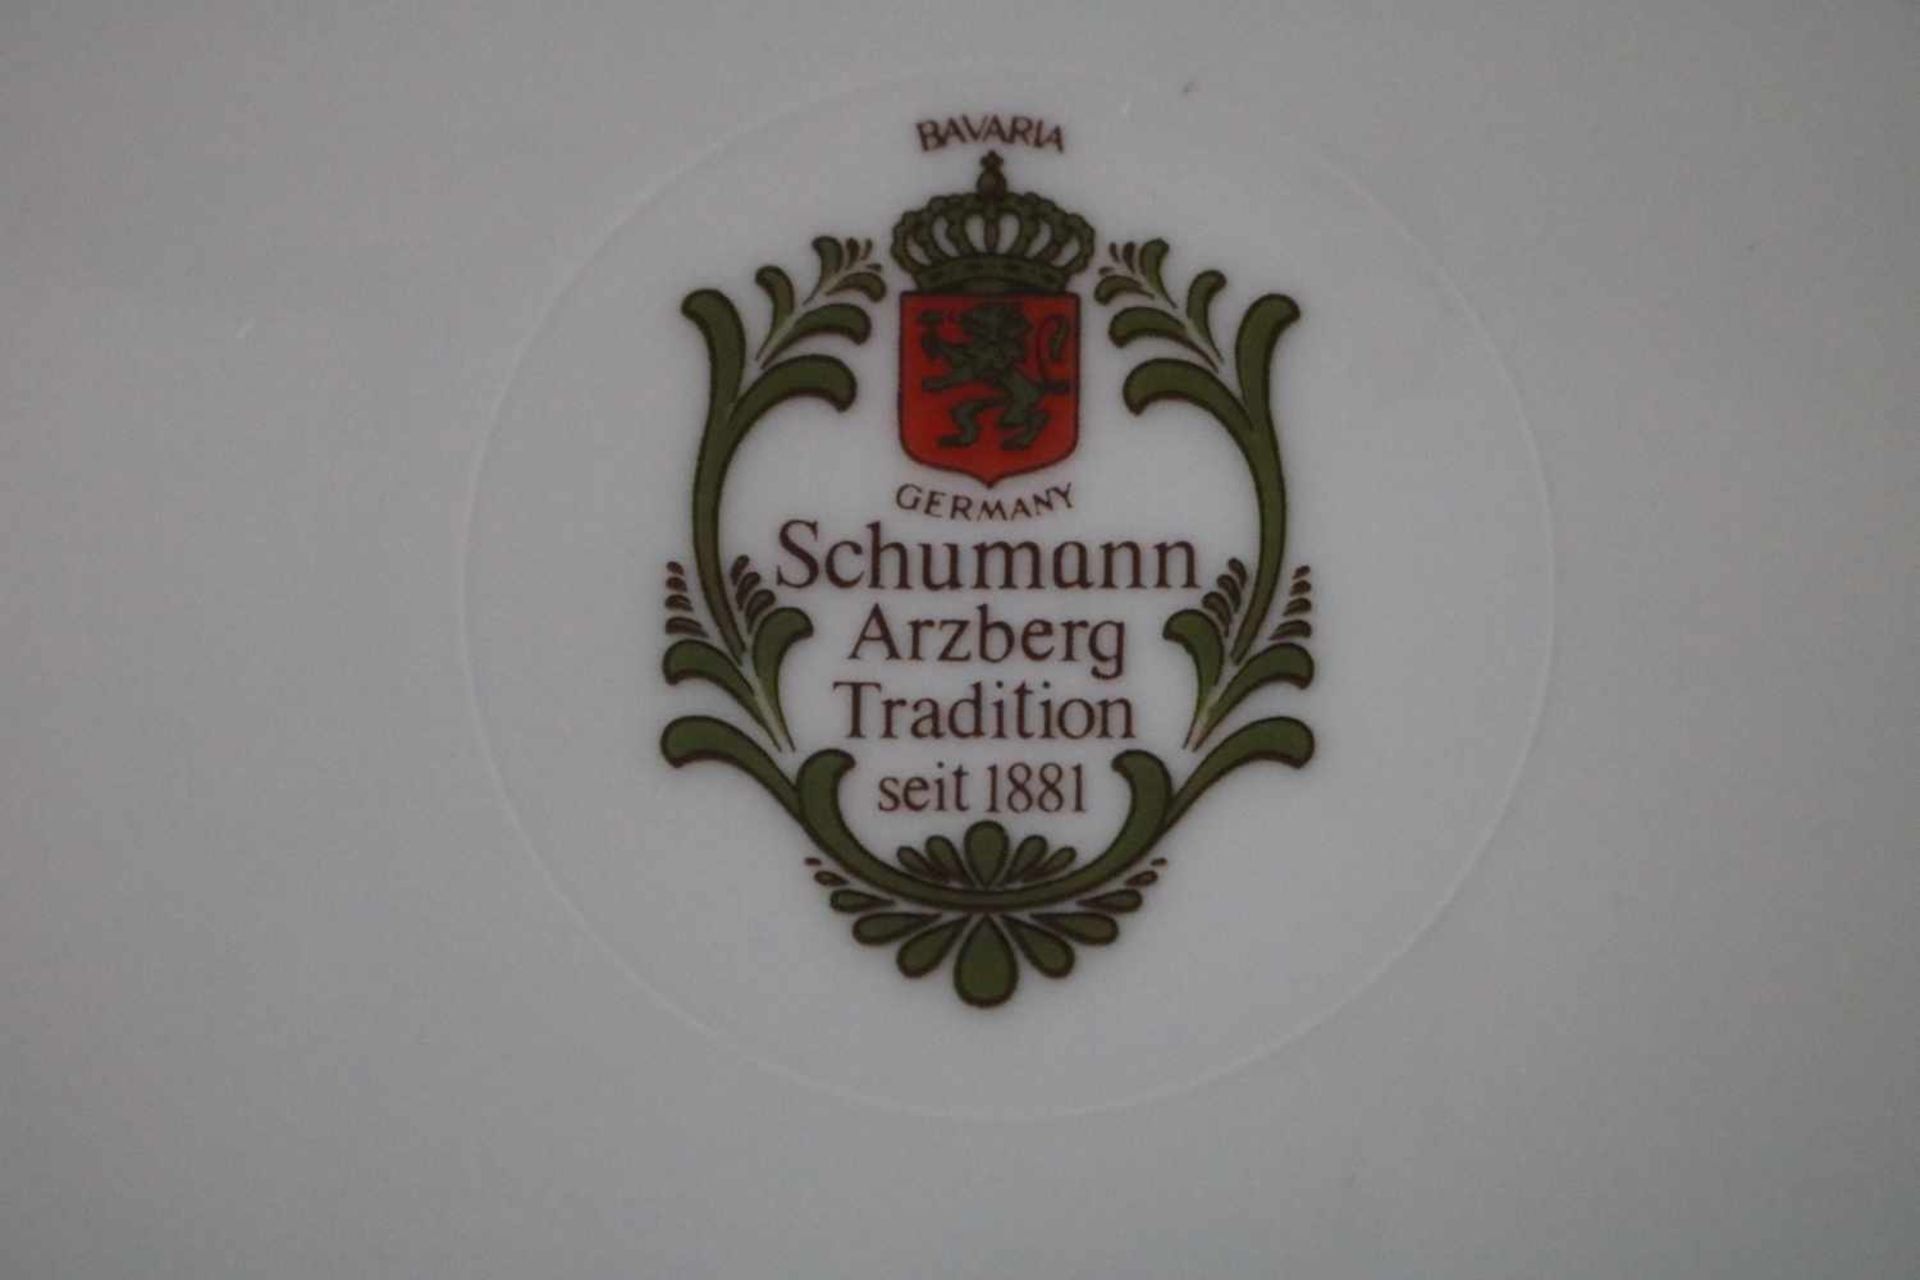 Porzellanschalen, Manufrakturen Gerold, Schumann Arzberg Tradition, Kaiser, Deutschland, 3 Schalen - Image 7 of 10